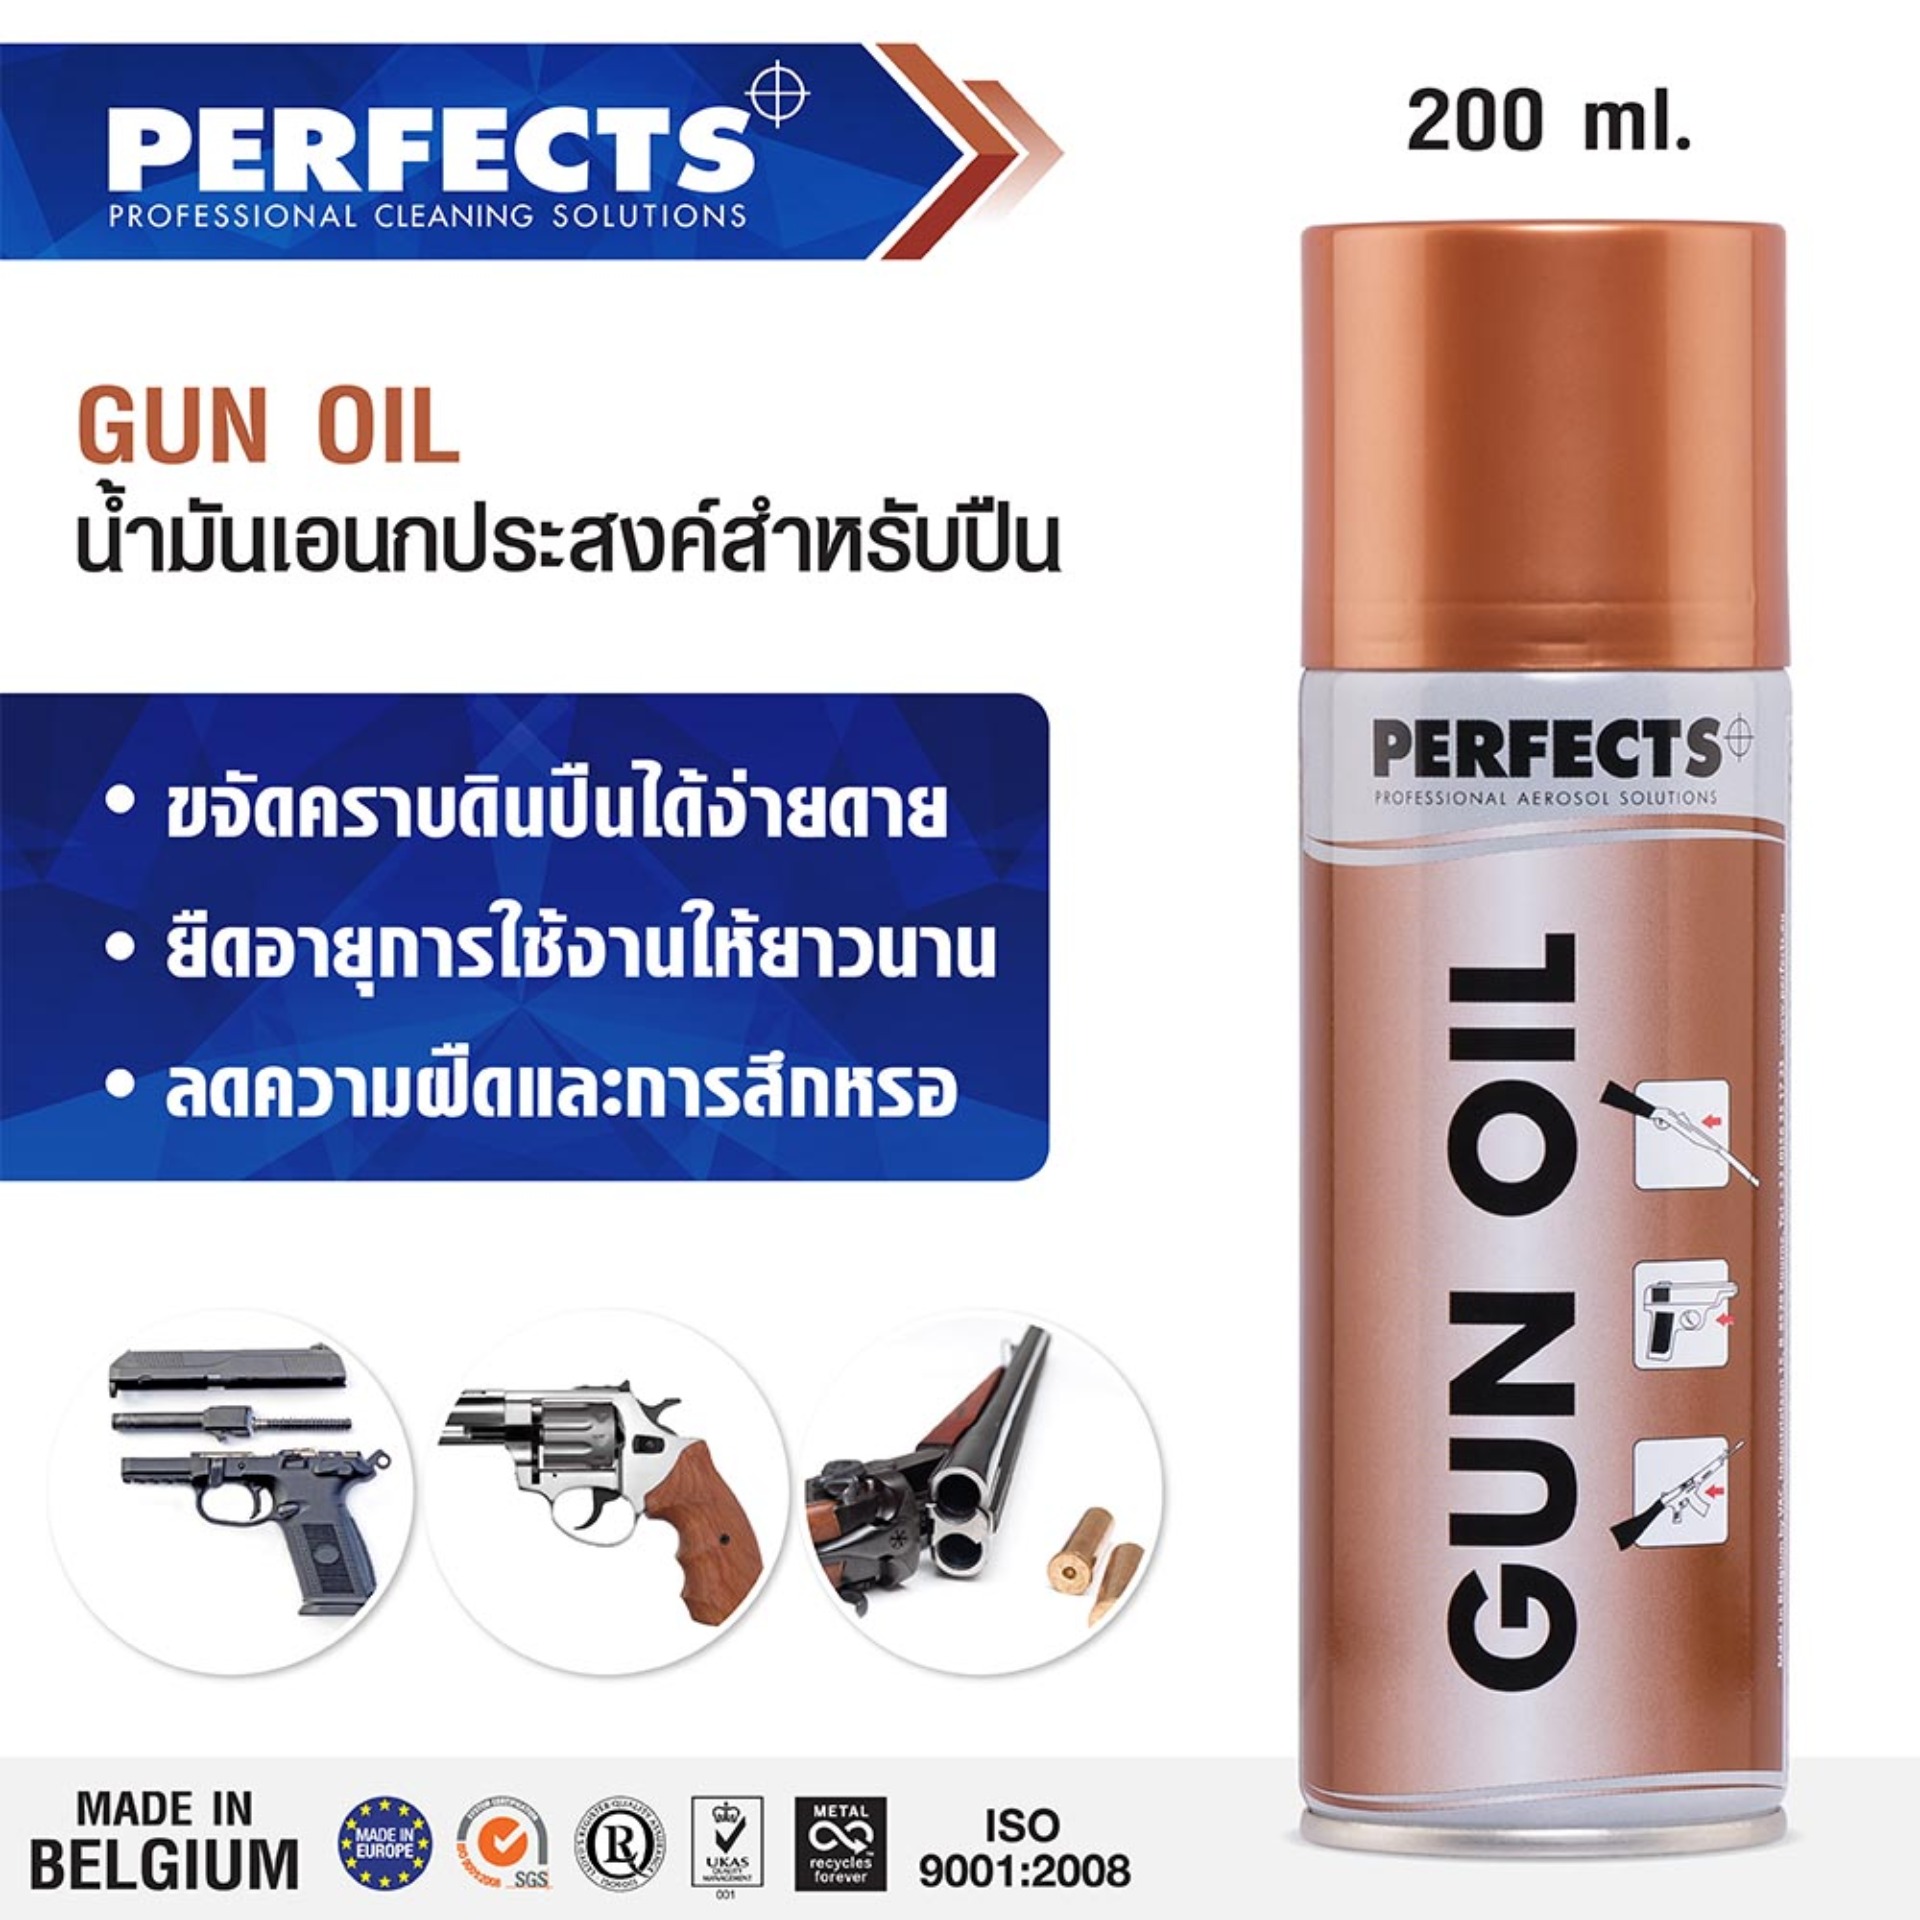 PERFECTS G un Oil 200ml. น้ำมันอเนกประสงค์สำหรับอาวุธปื น BROWN